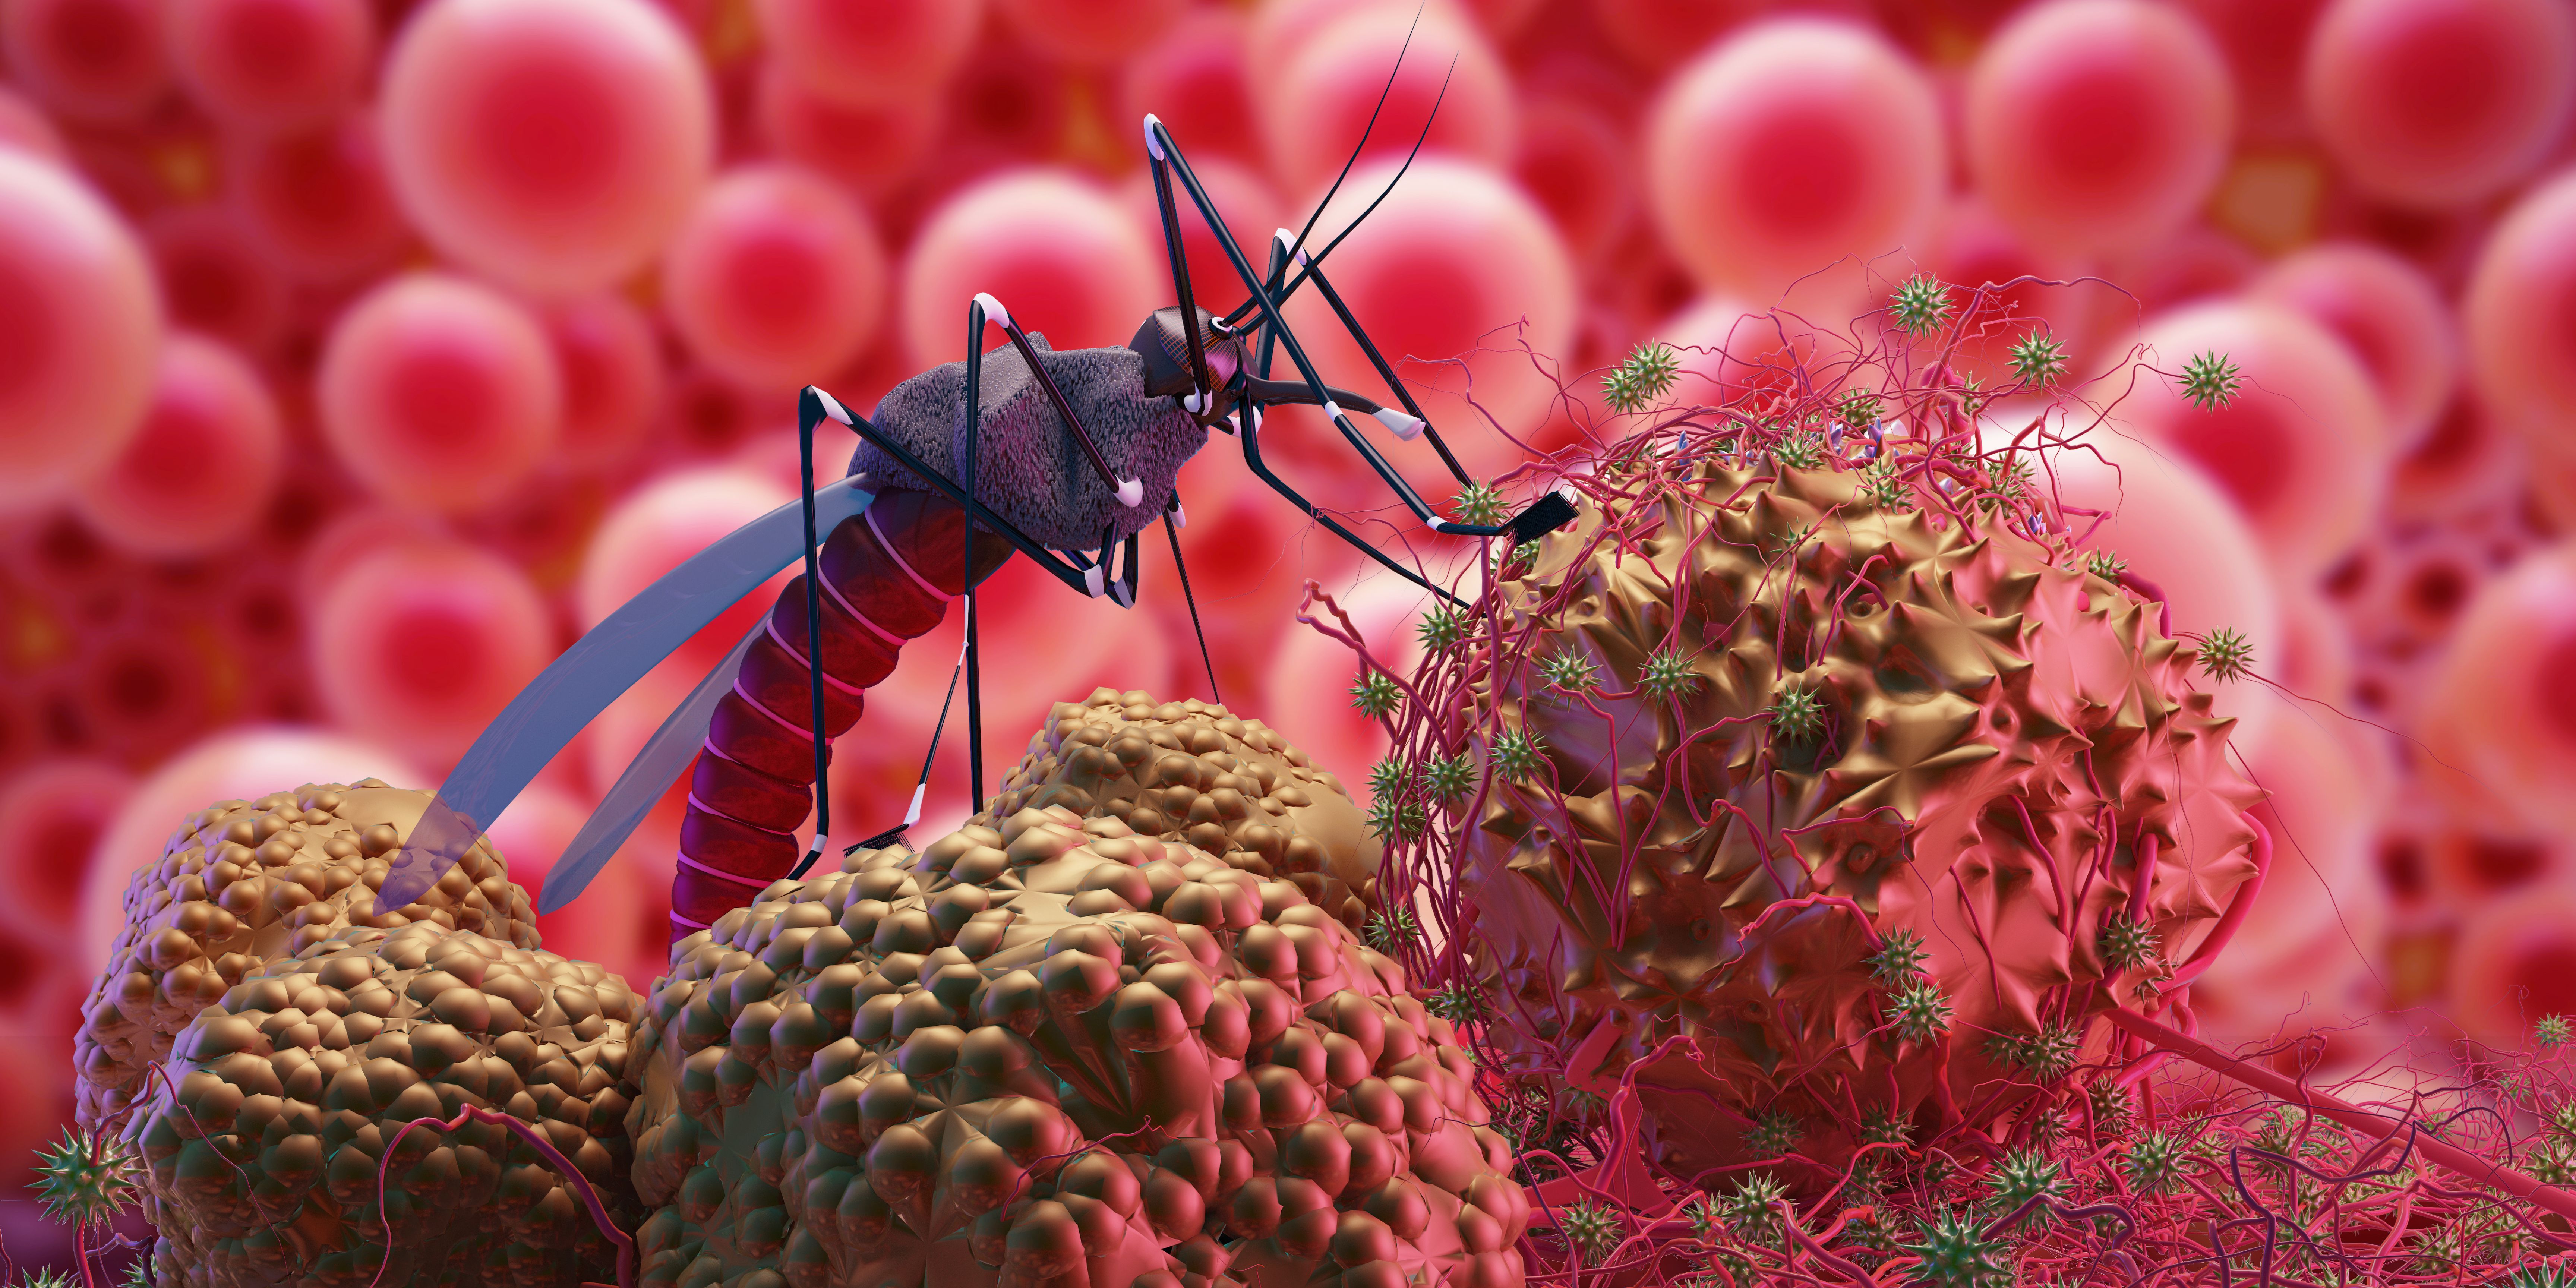 Mosquito with a malaria virus illustration